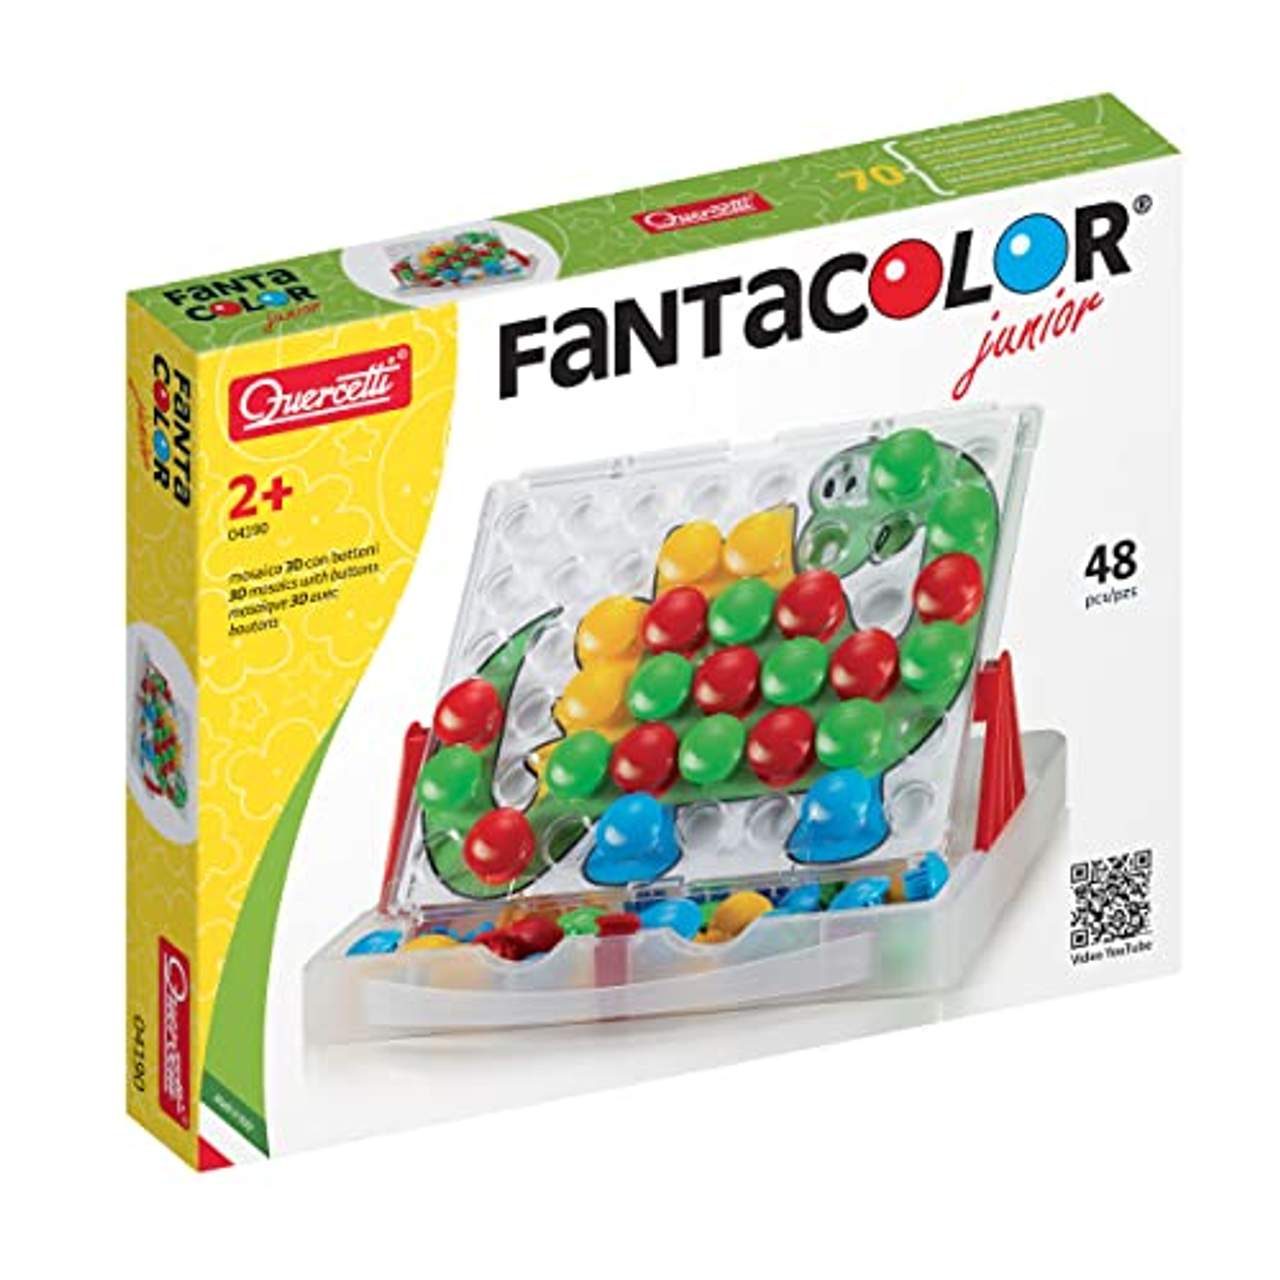 Quercetti 4190 Fantacolor Junior